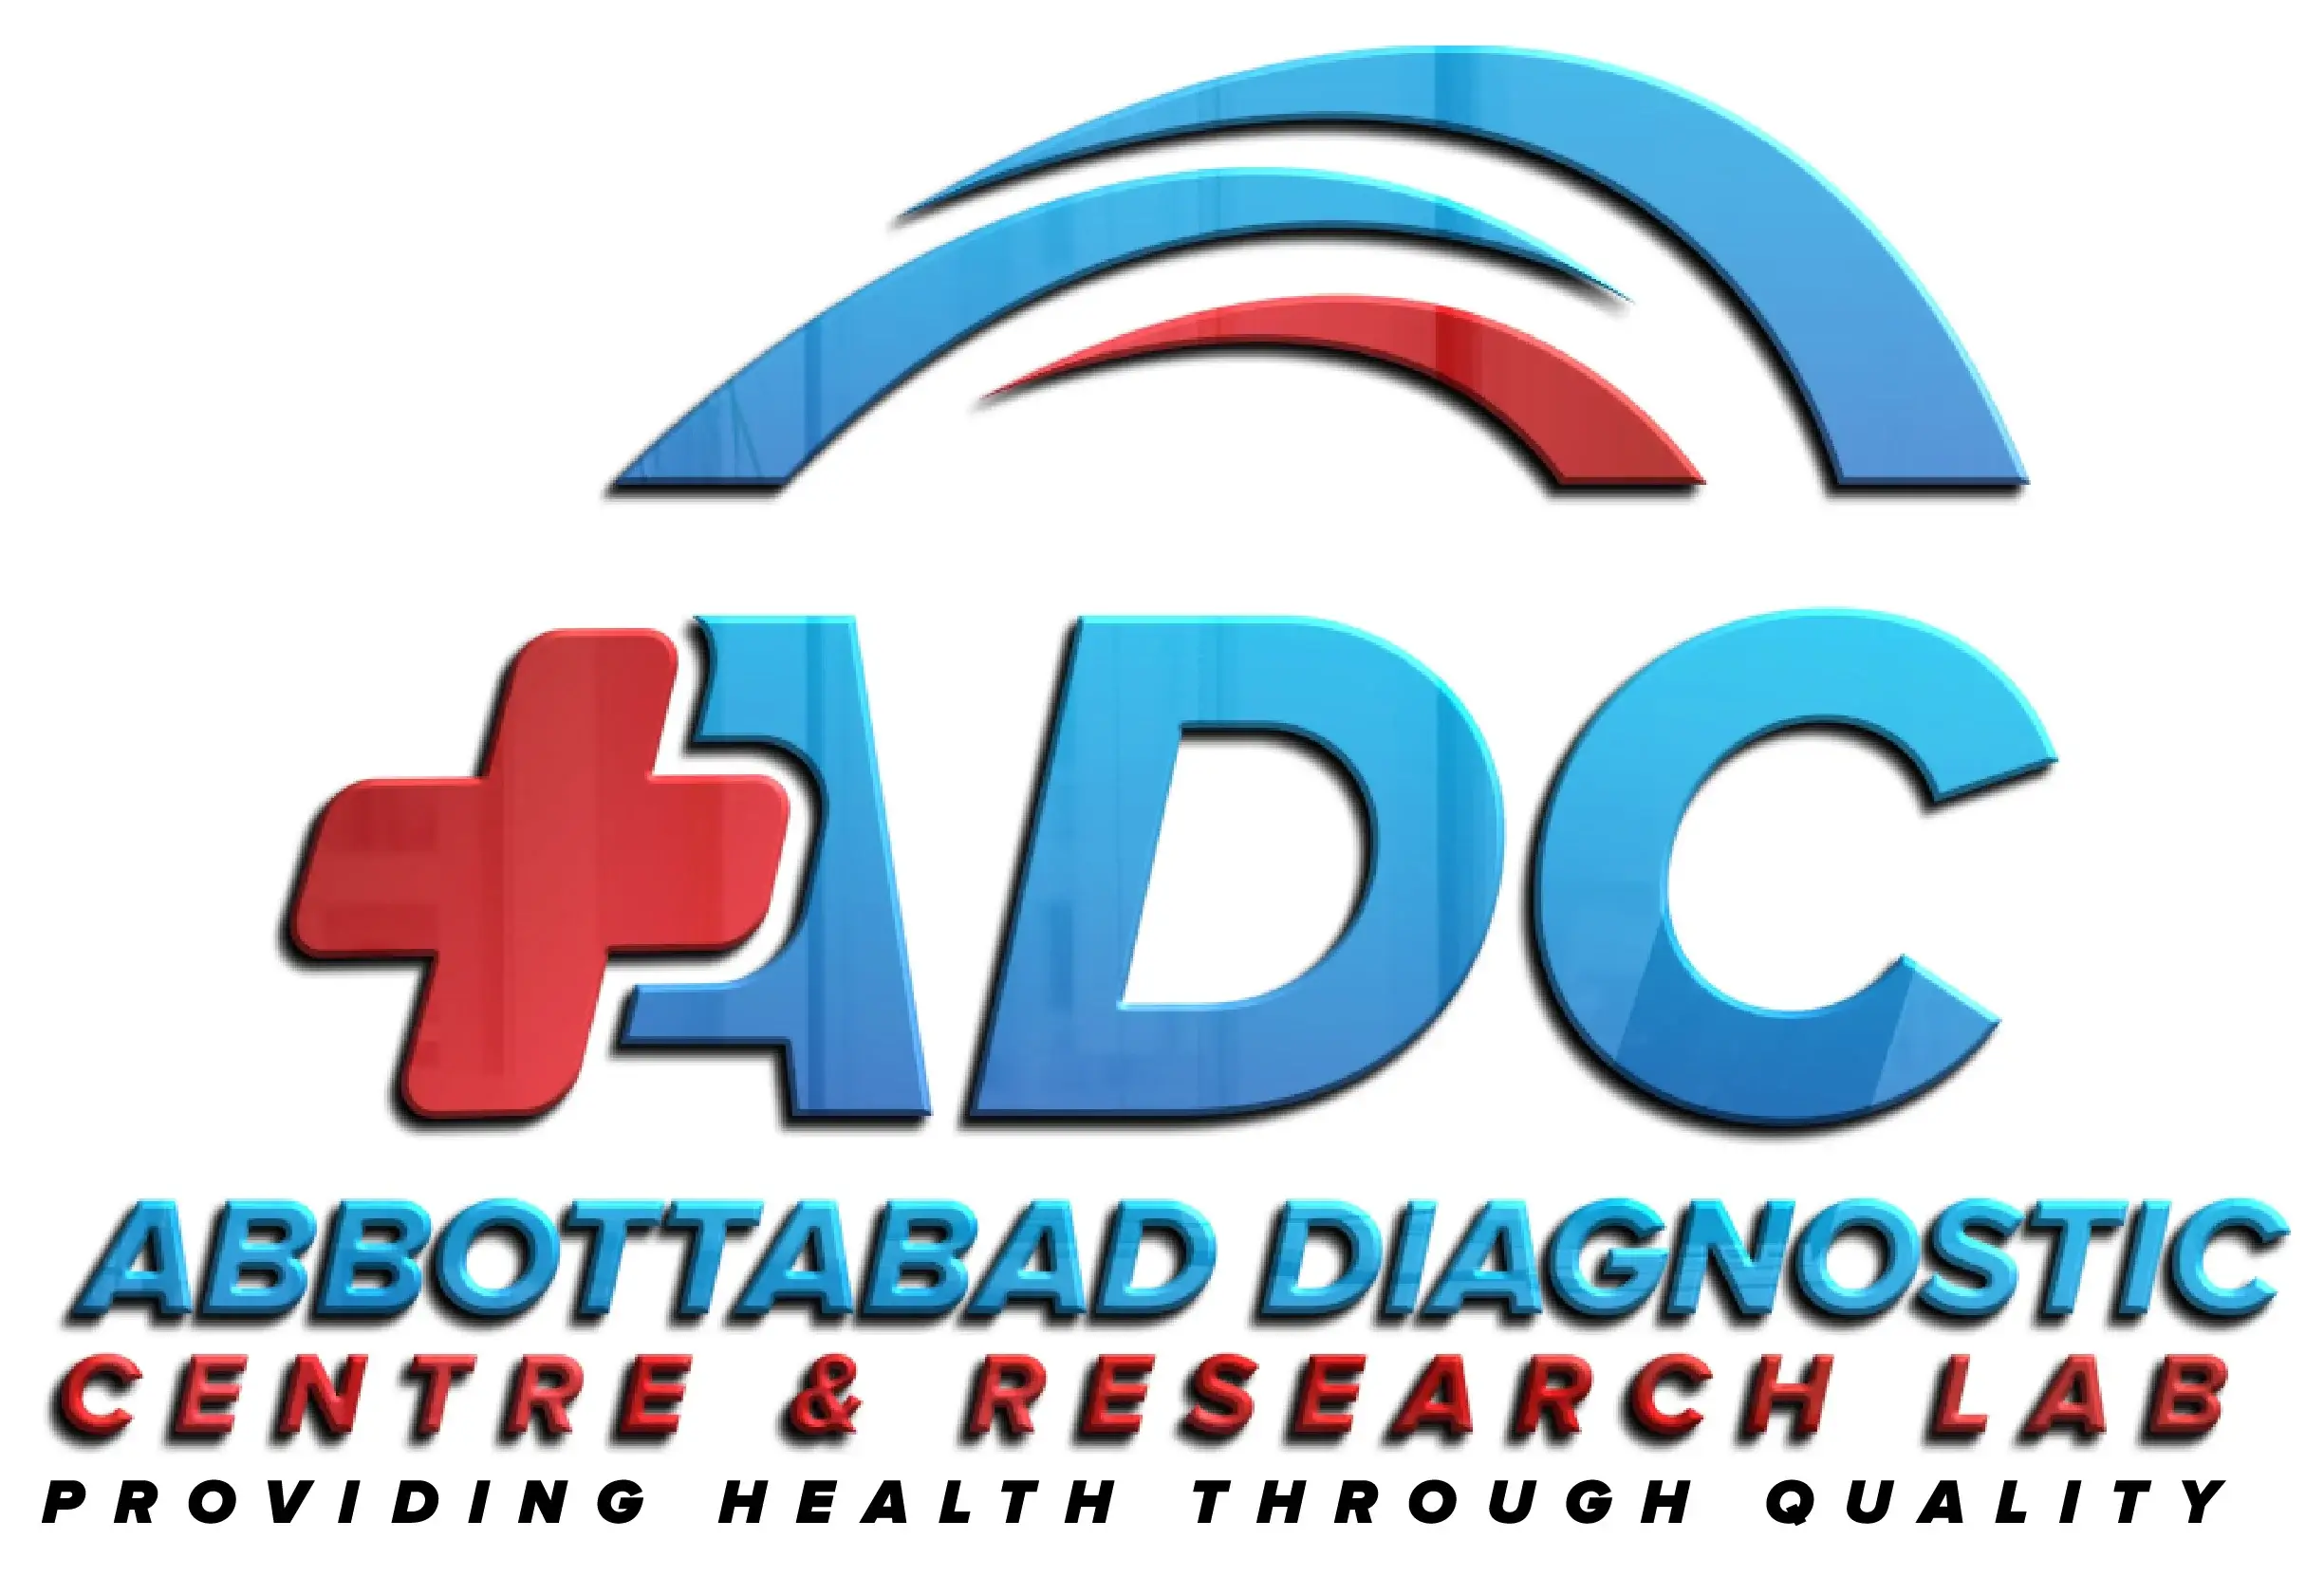 Abbottabad Diagnostic Centre & Research Lab